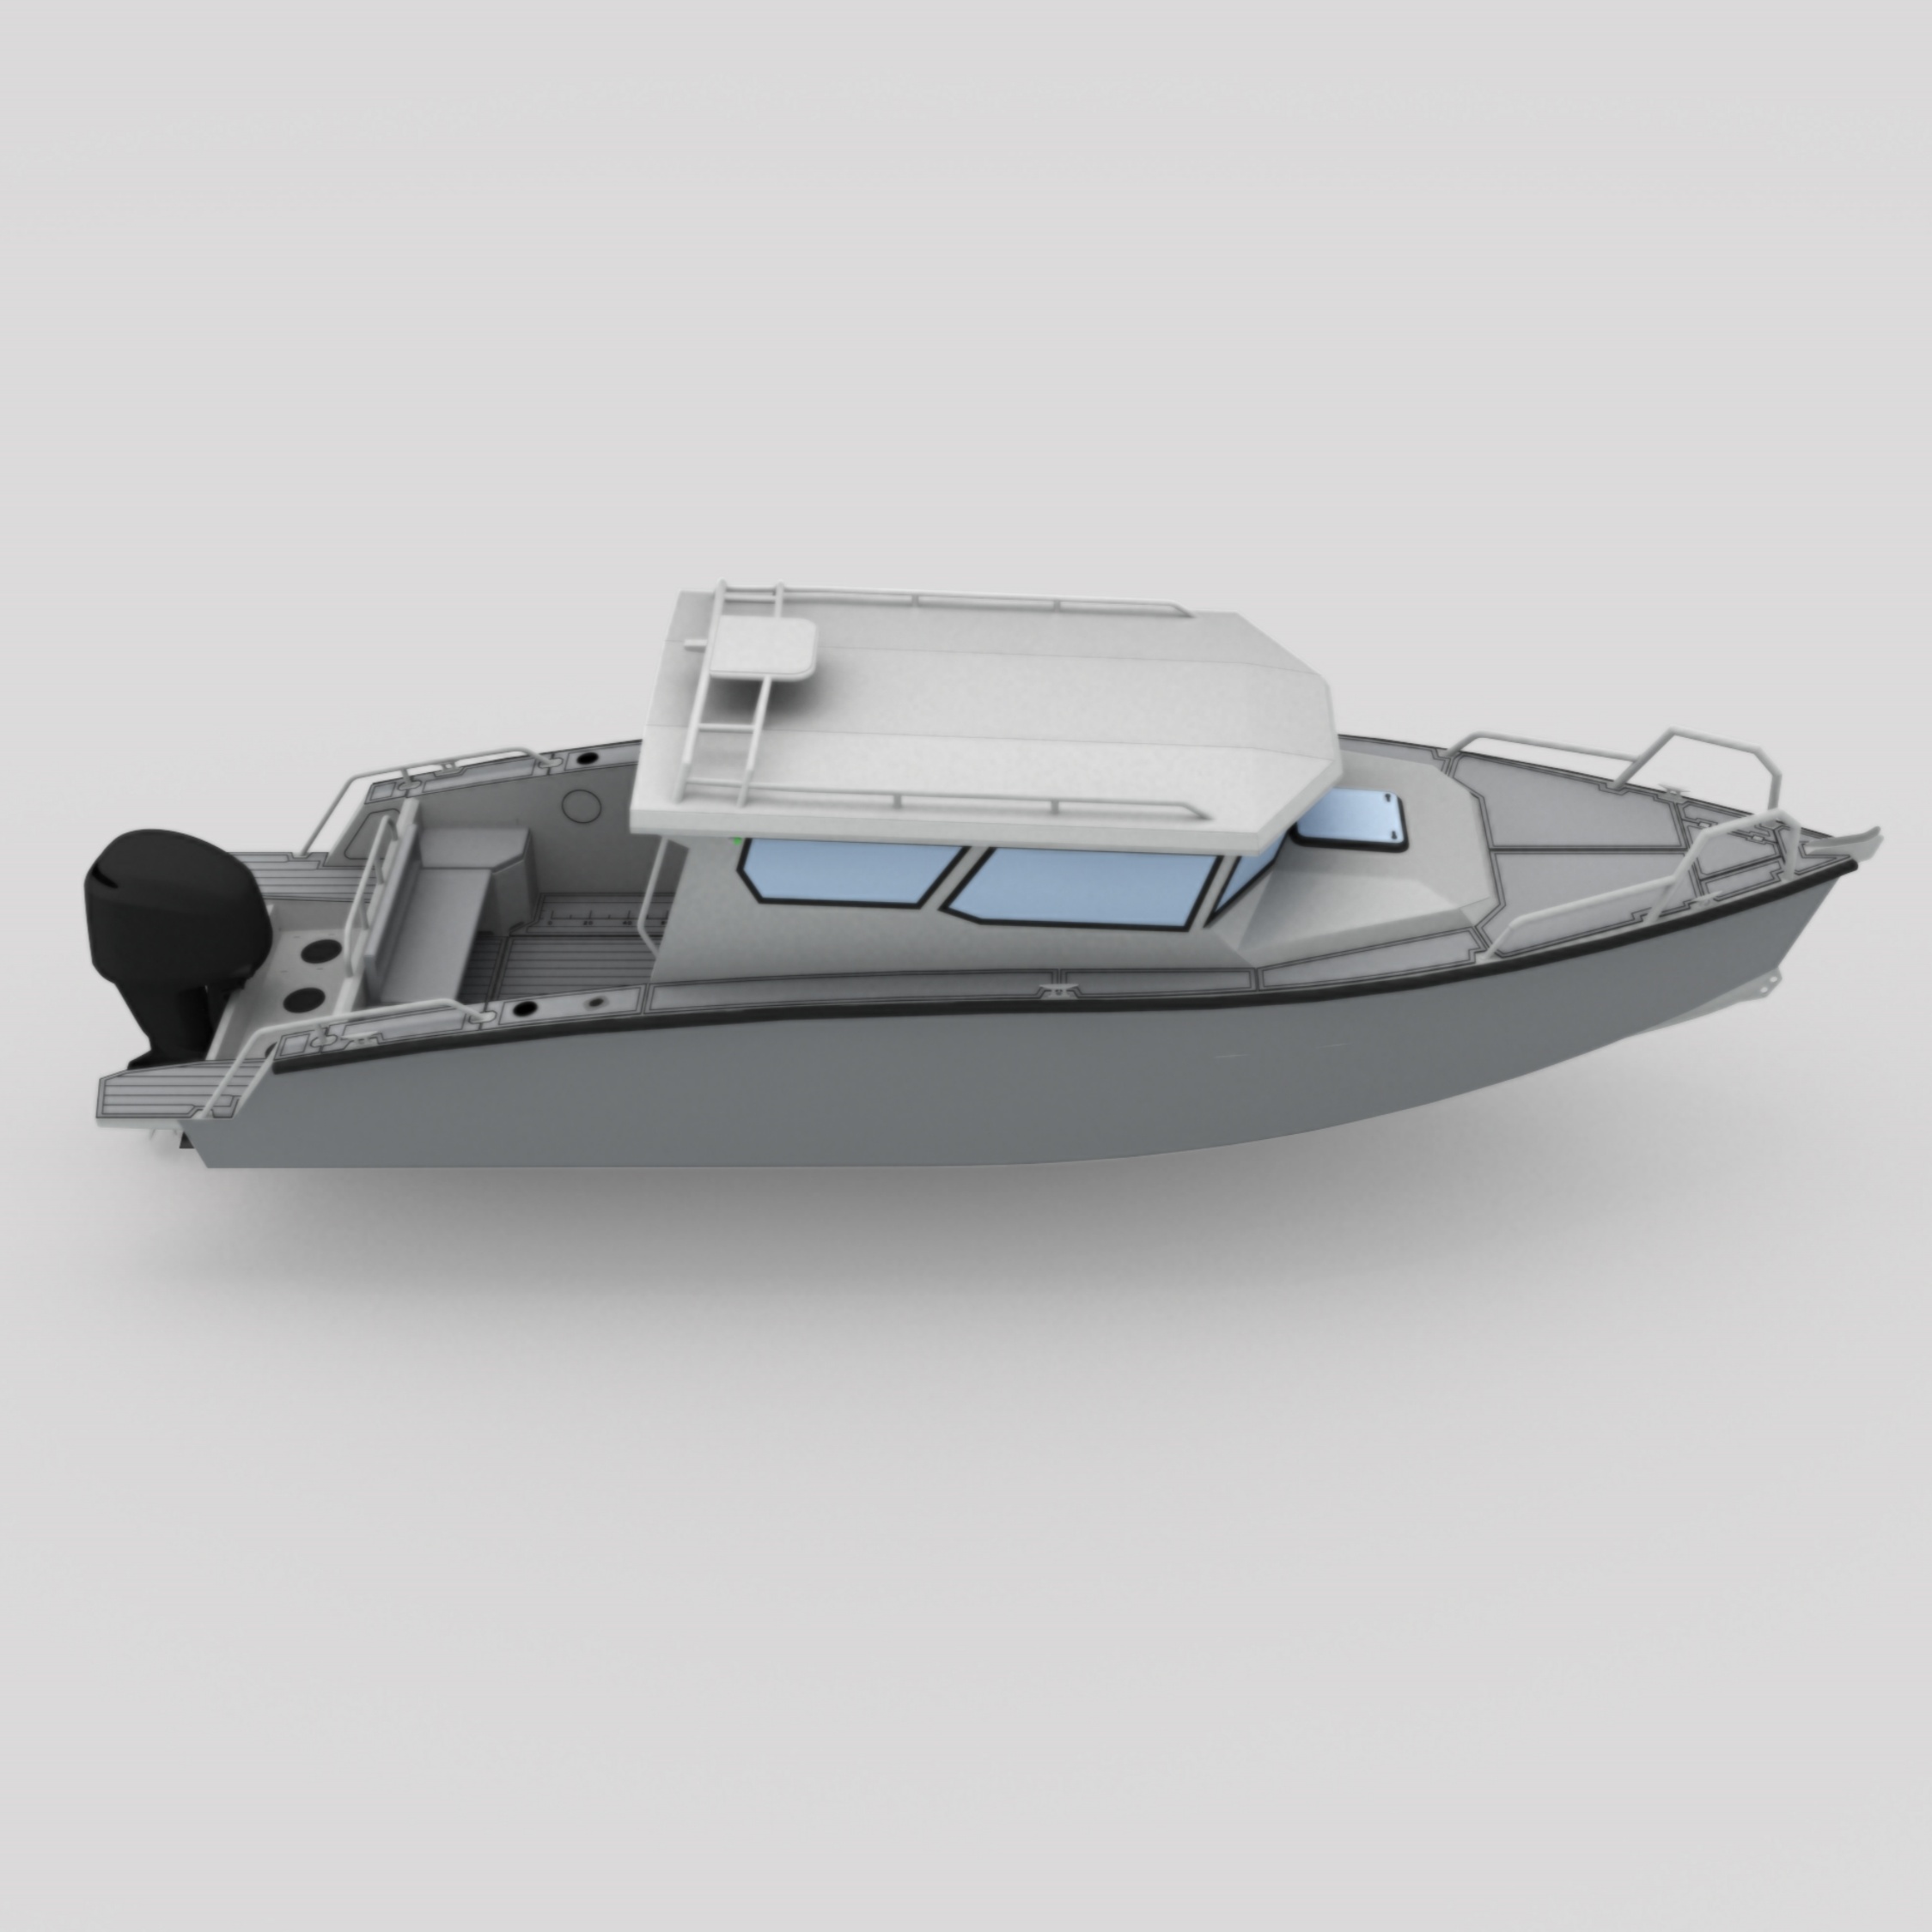 Bladecraft 8.4m Aluminum Boat For Fishing Sports Patrols